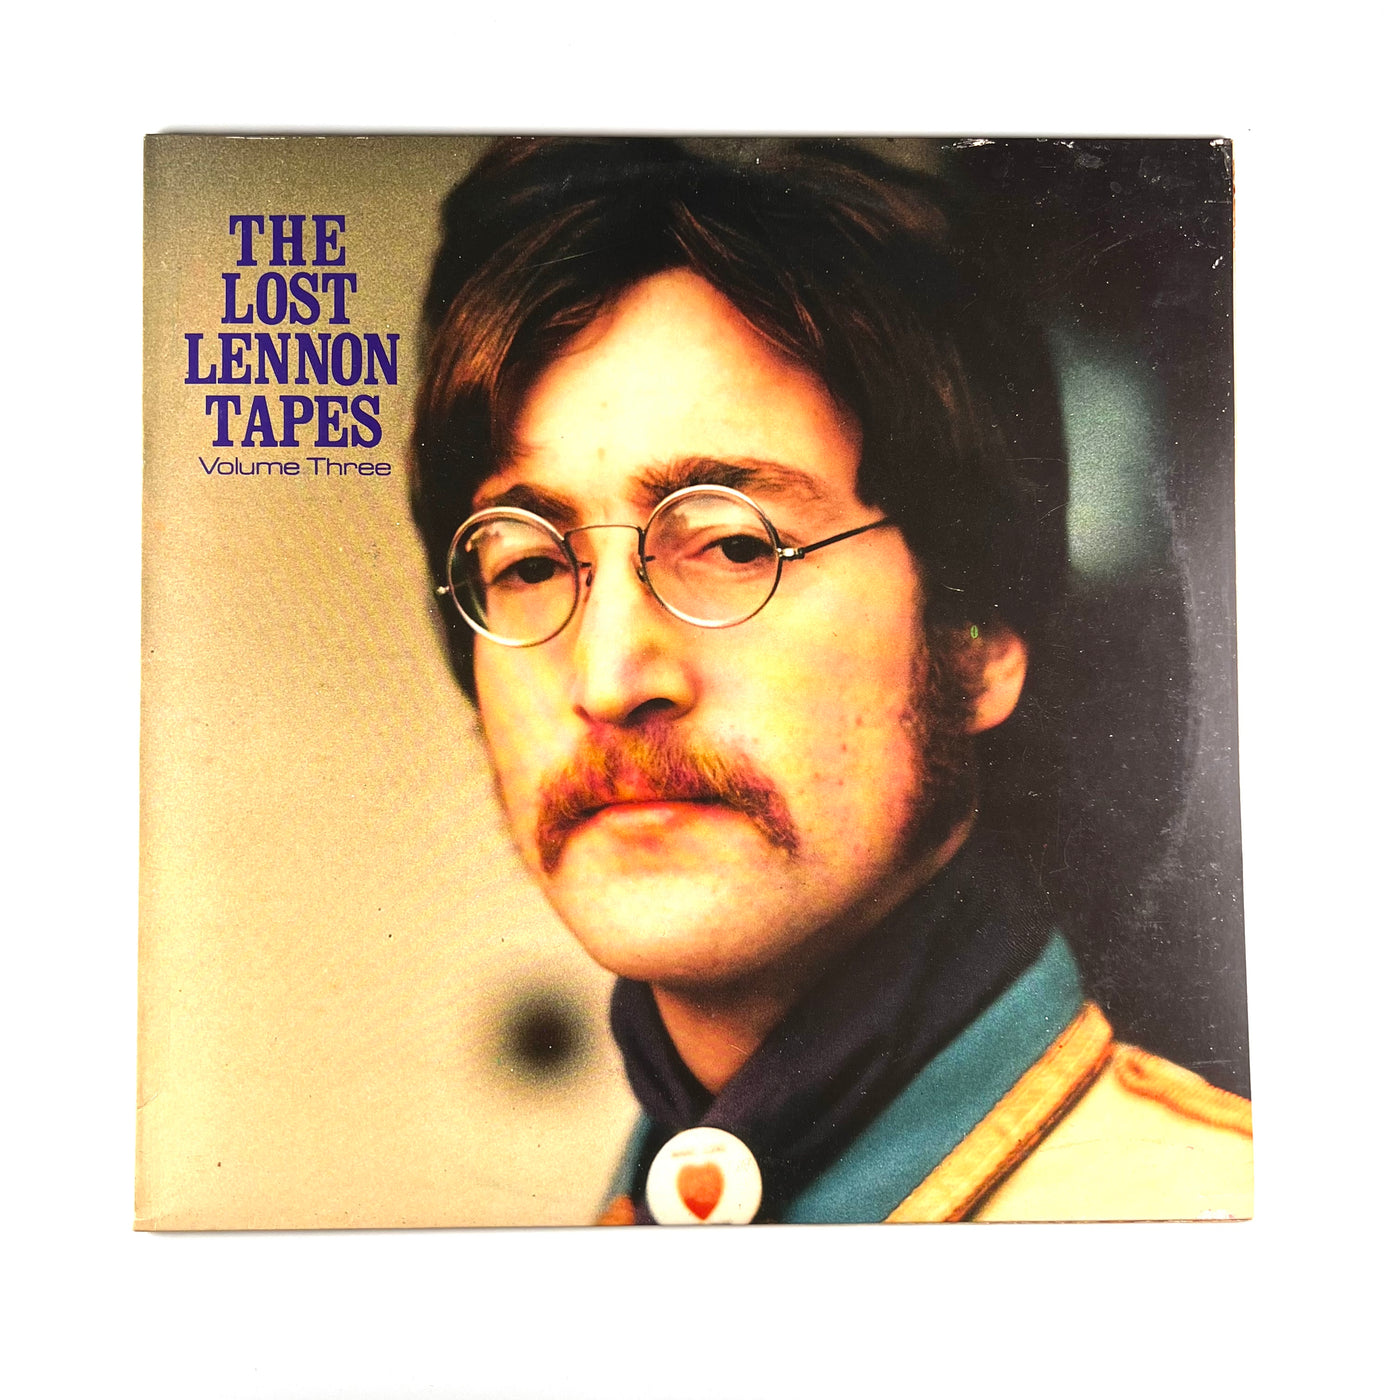 John Lennon - The Lost Lennon Tapes Volume Three